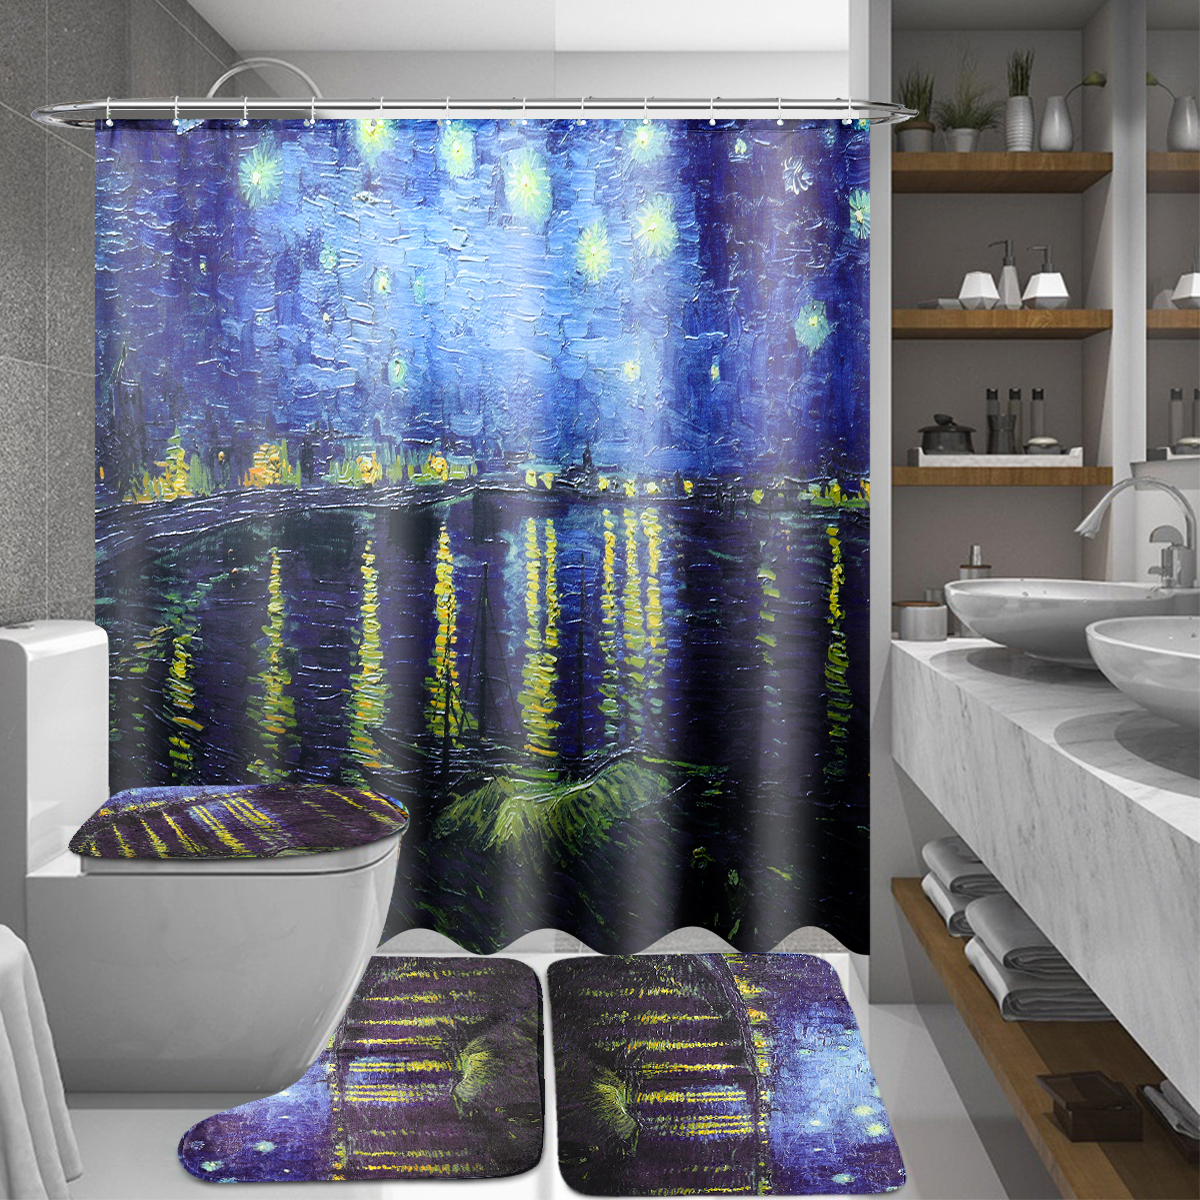 

180x180cm Rhone River Night Bathroom Shower Curtains Lid Toilet Cover Mat Rug Set